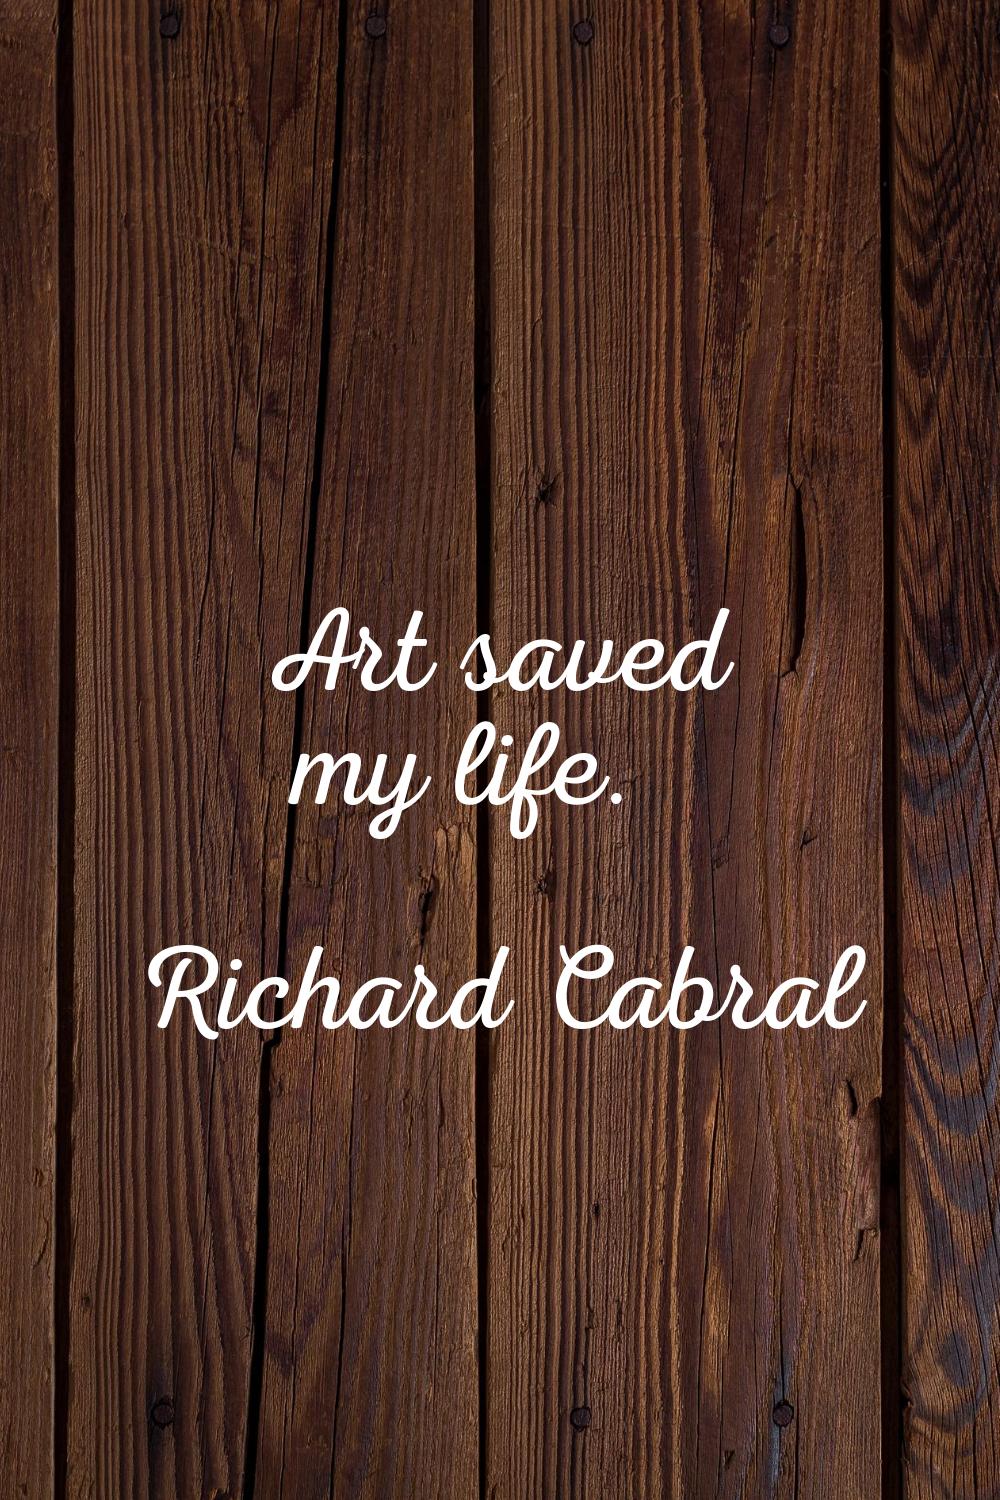 Art saved my life.